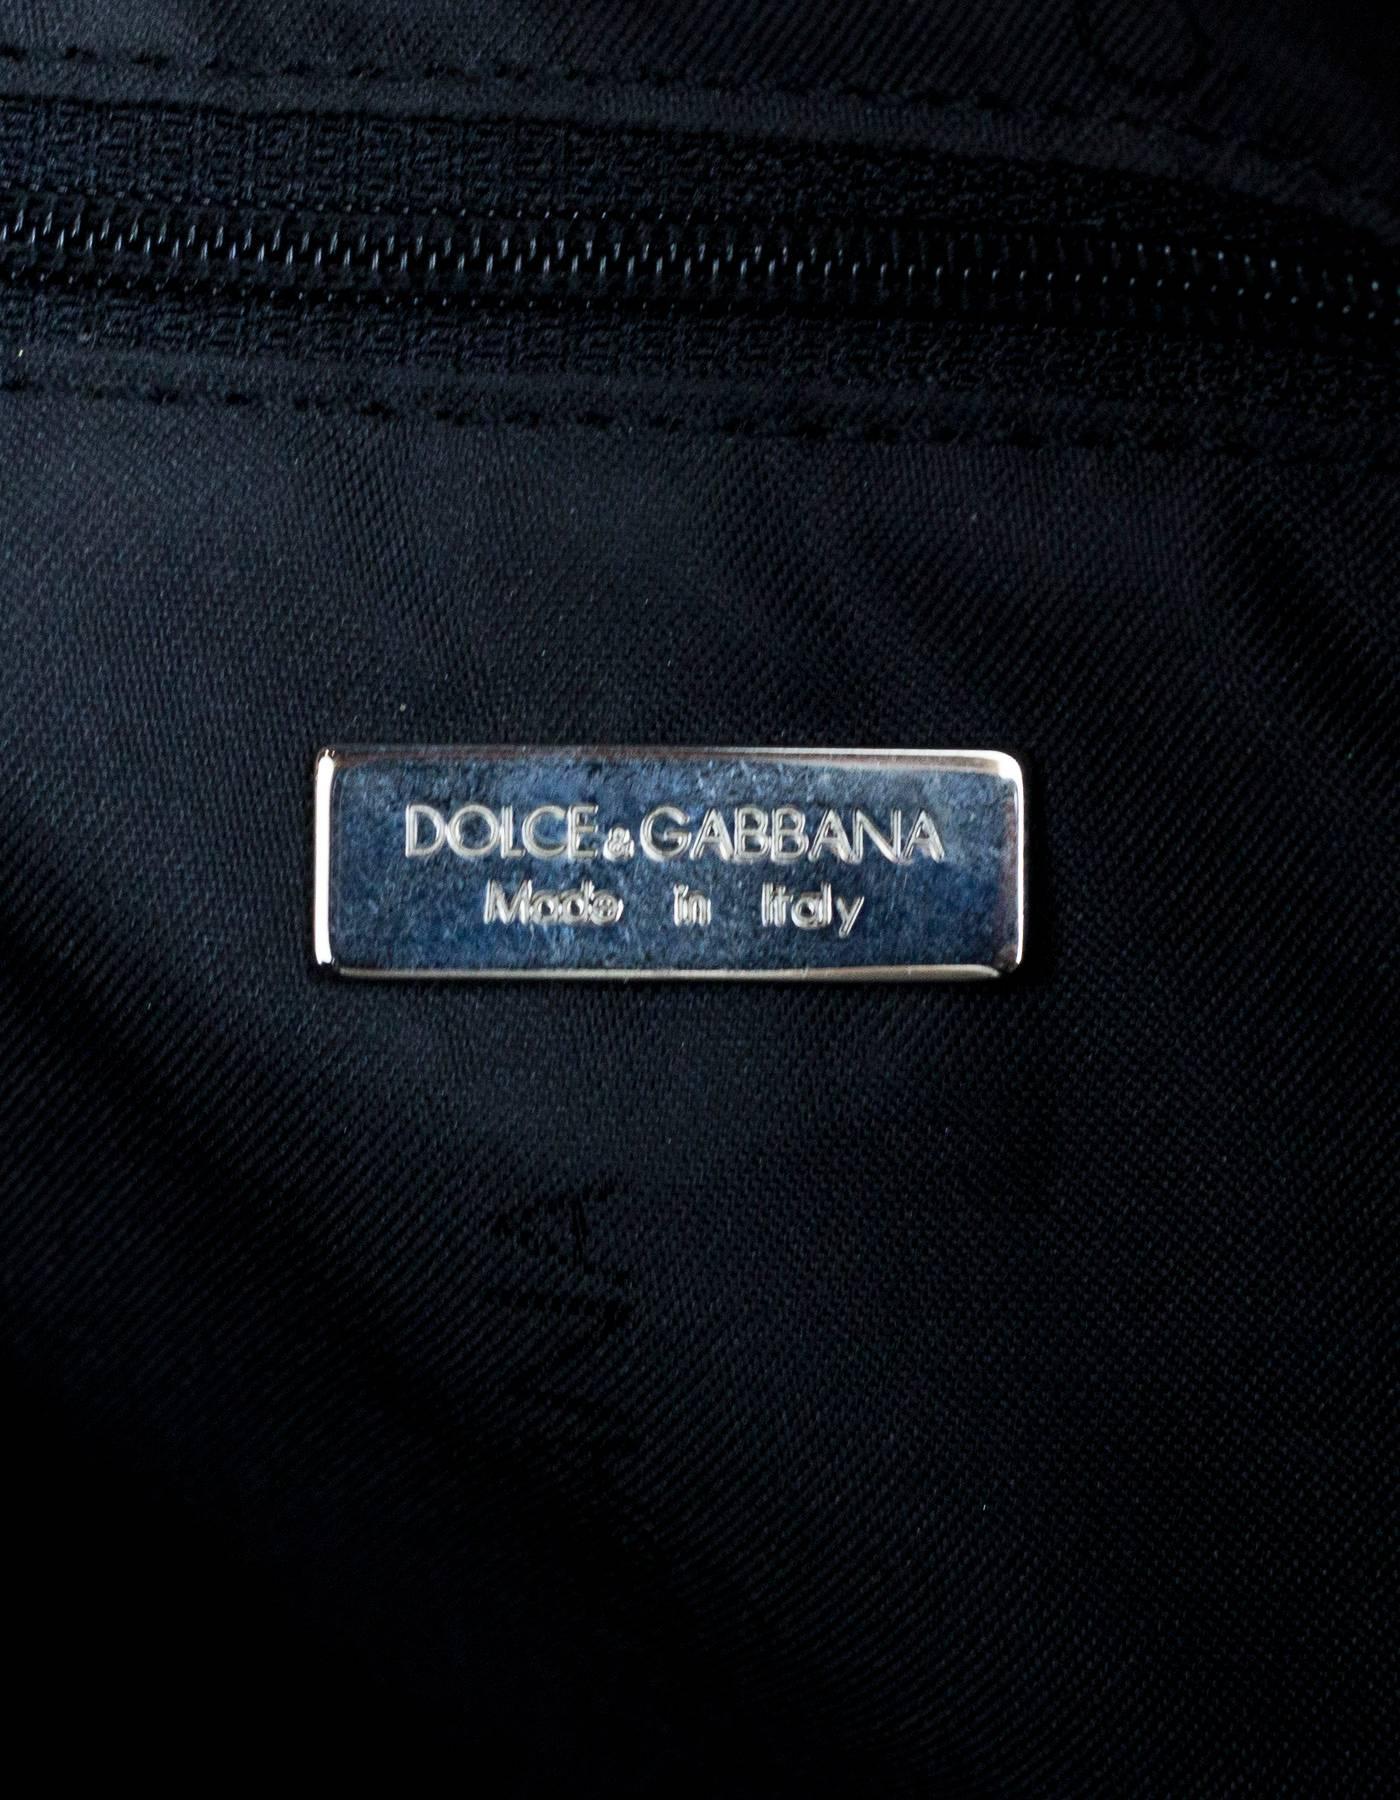 Dolce & Gabbana Black Leather Studded Tote Bag 3